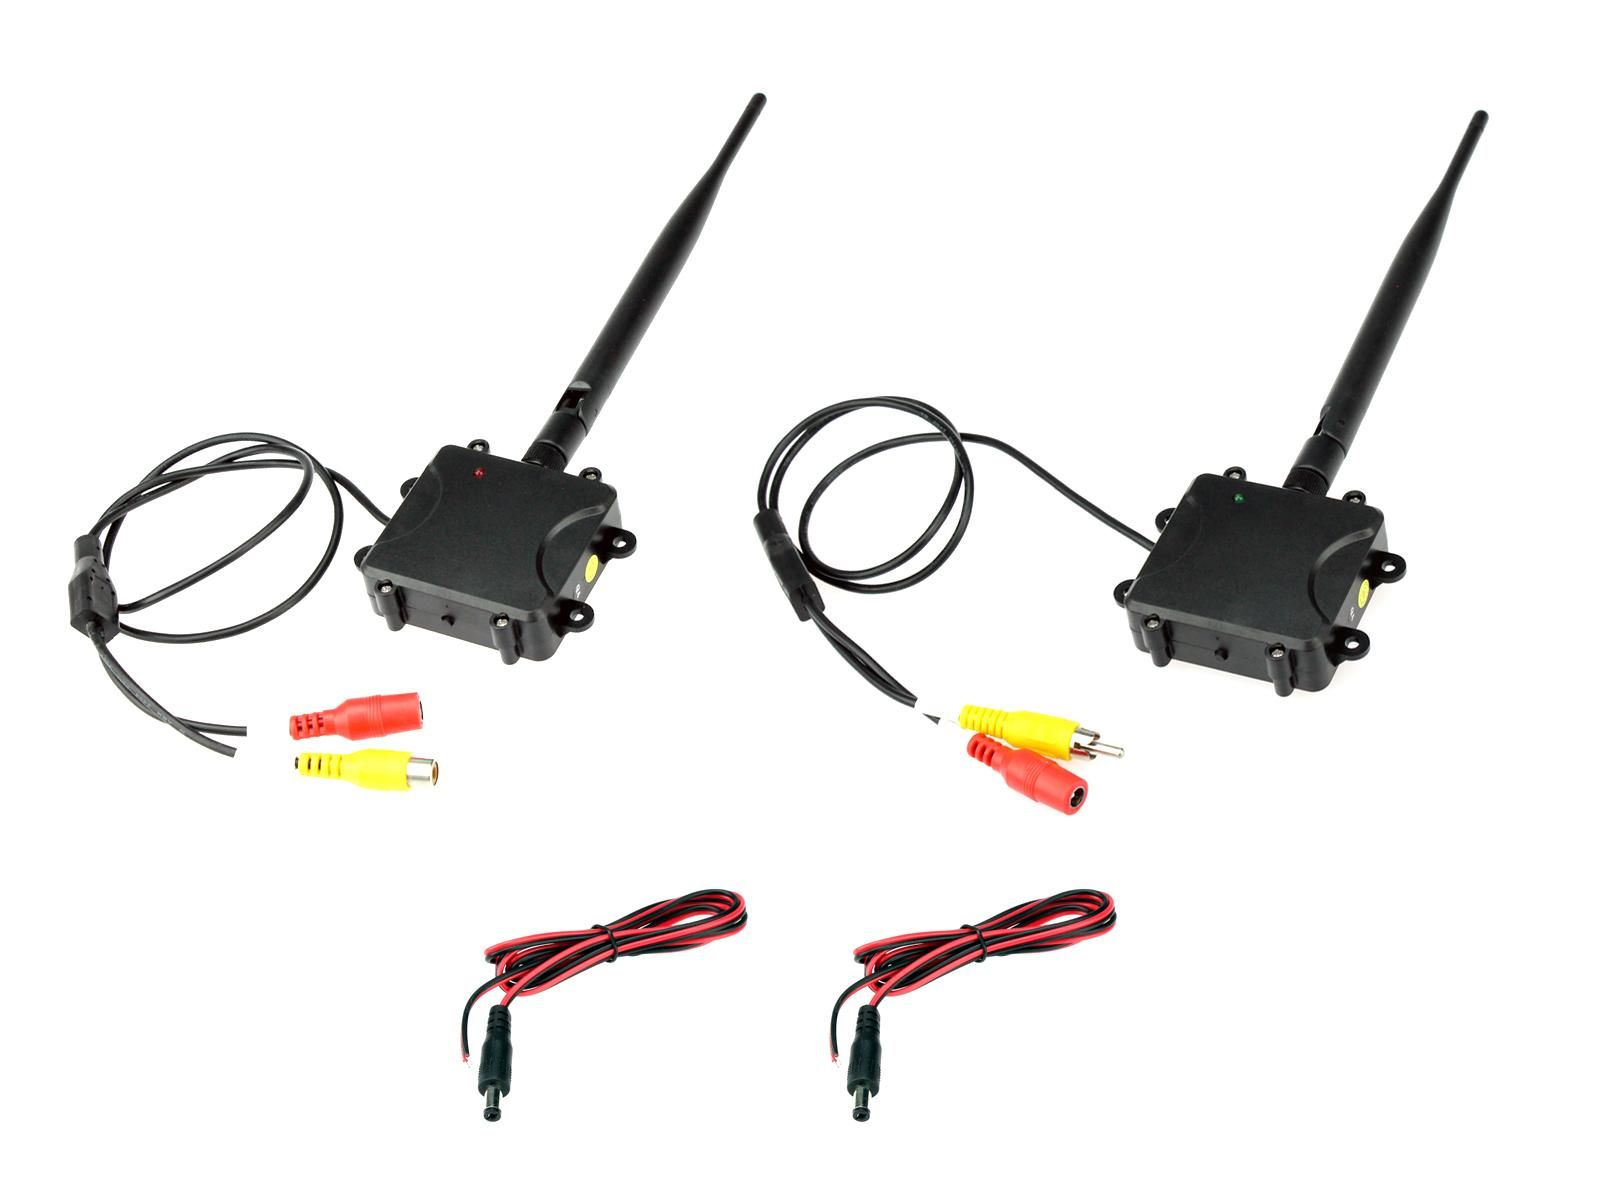 m-use wireless camera adaptor kit transmitter/receiver